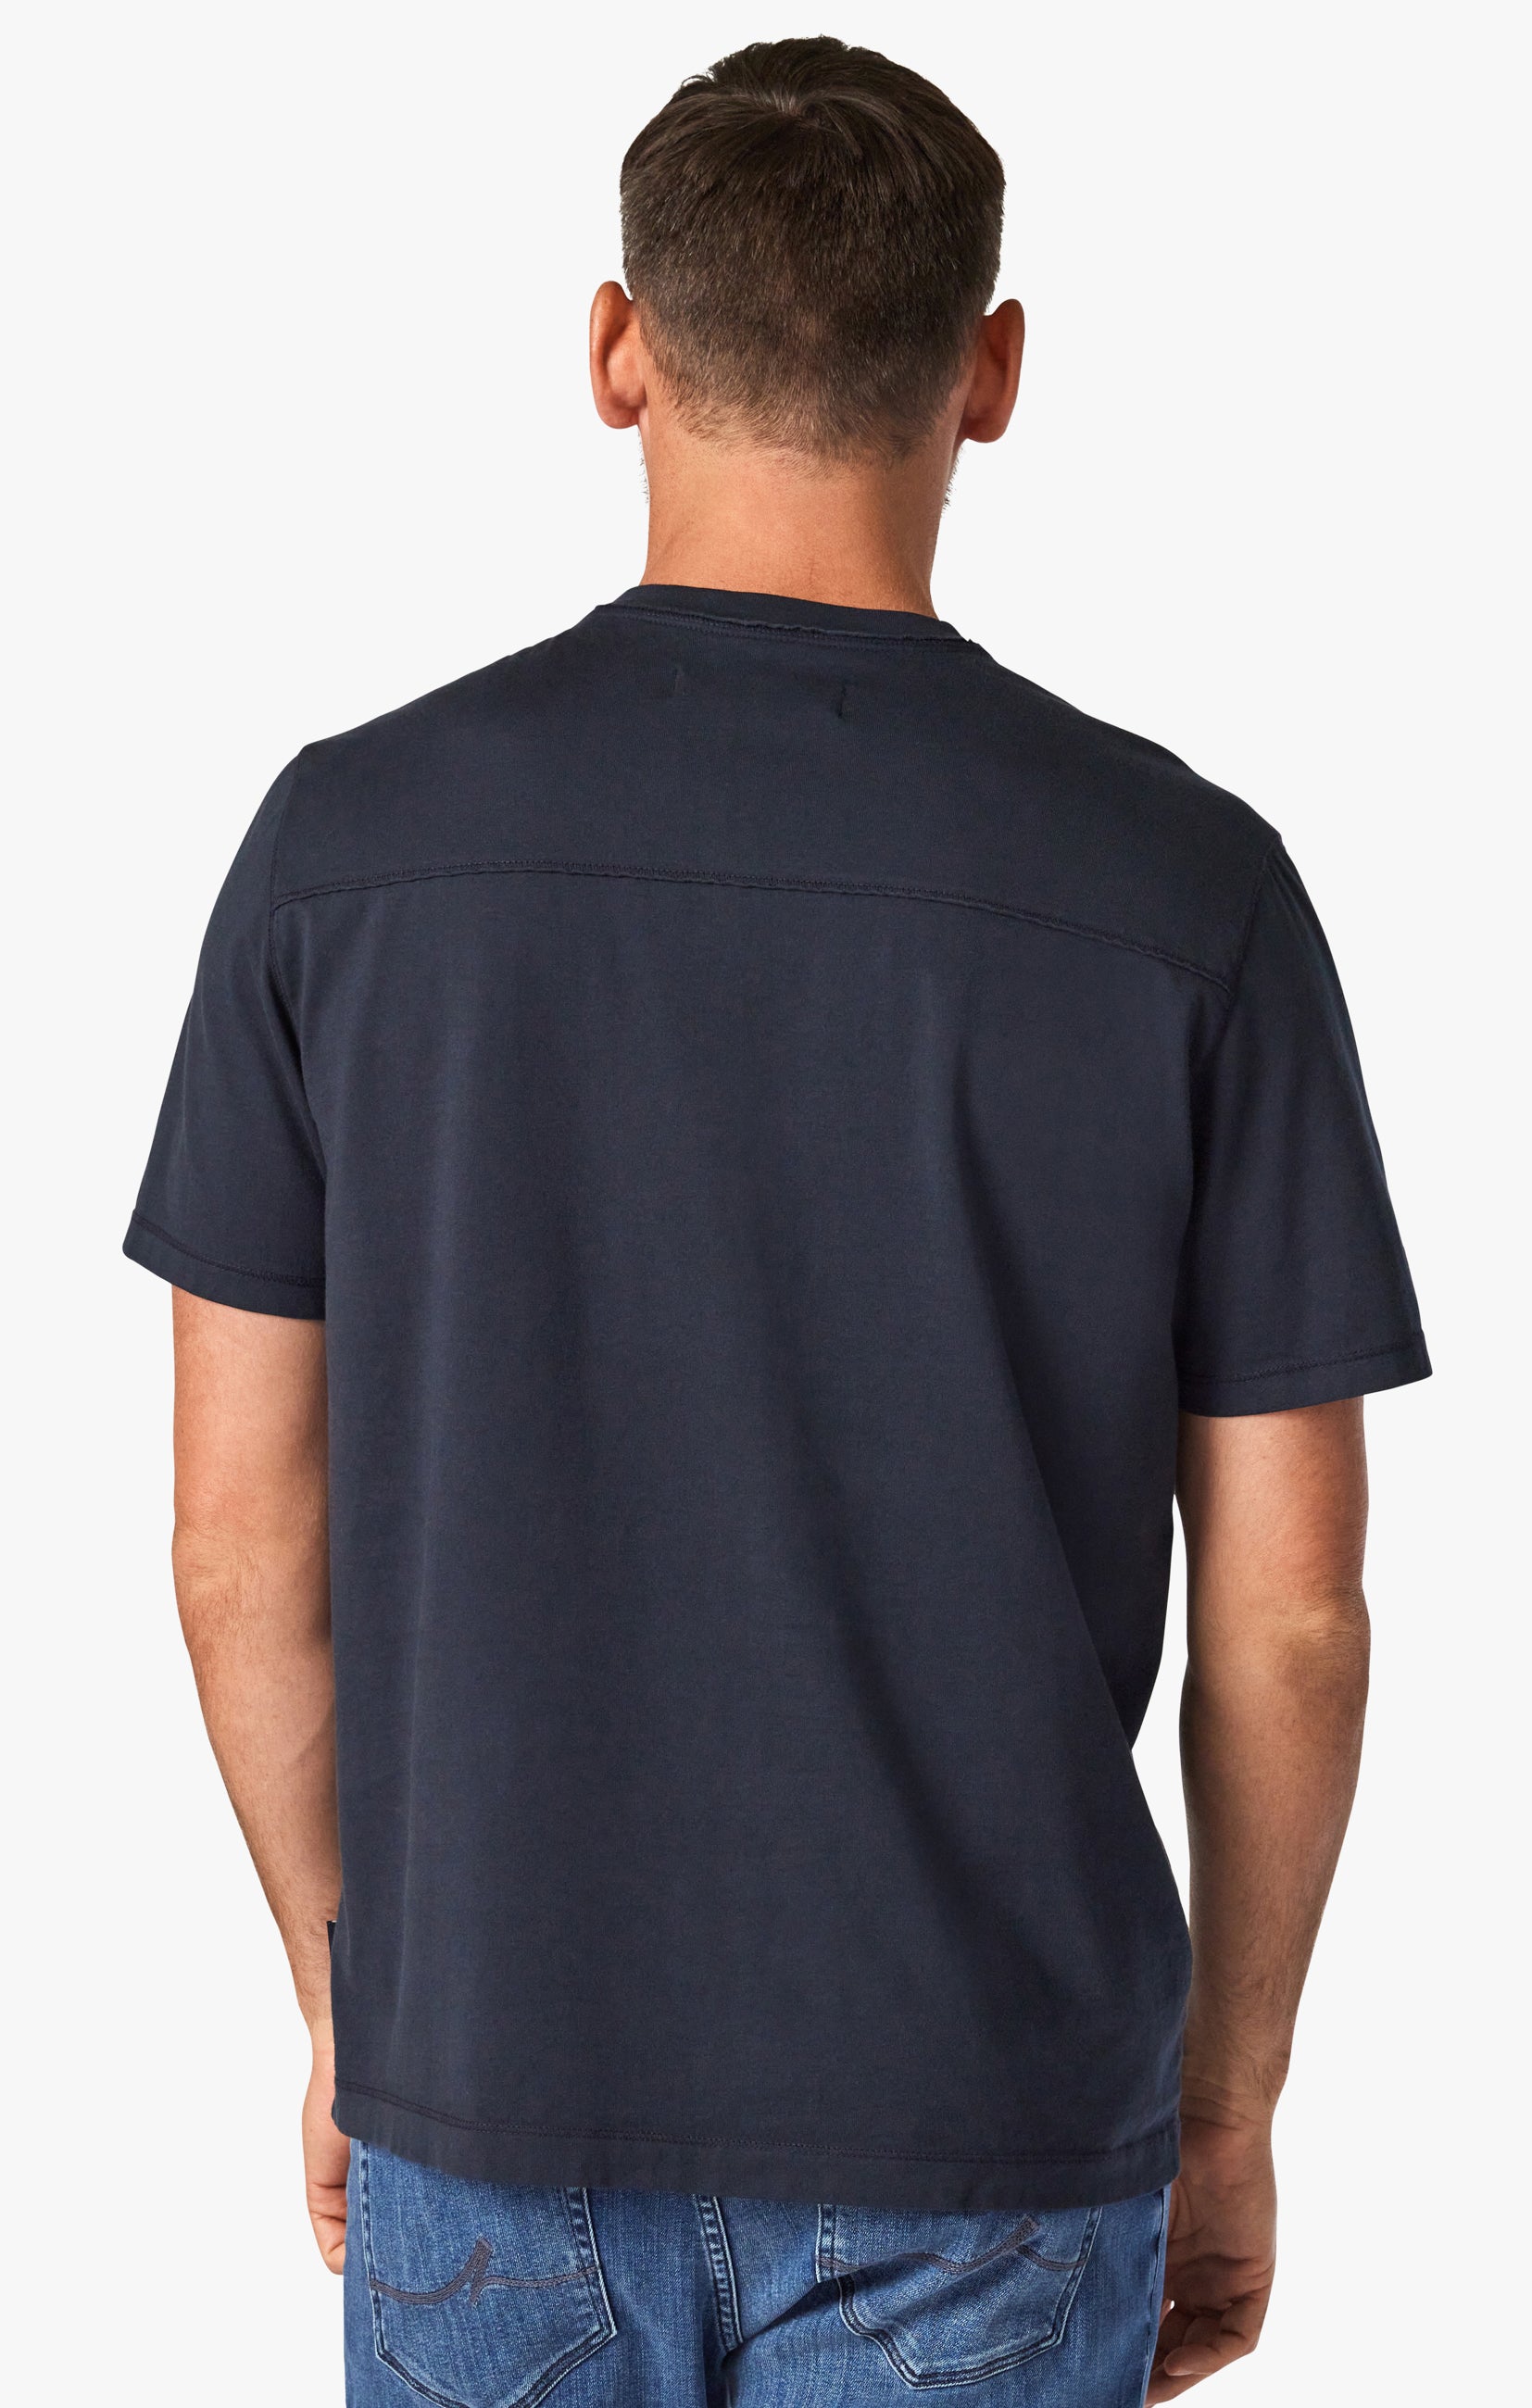 Deconstructed V-Neck T-Shirt in Dark Navy Image 4